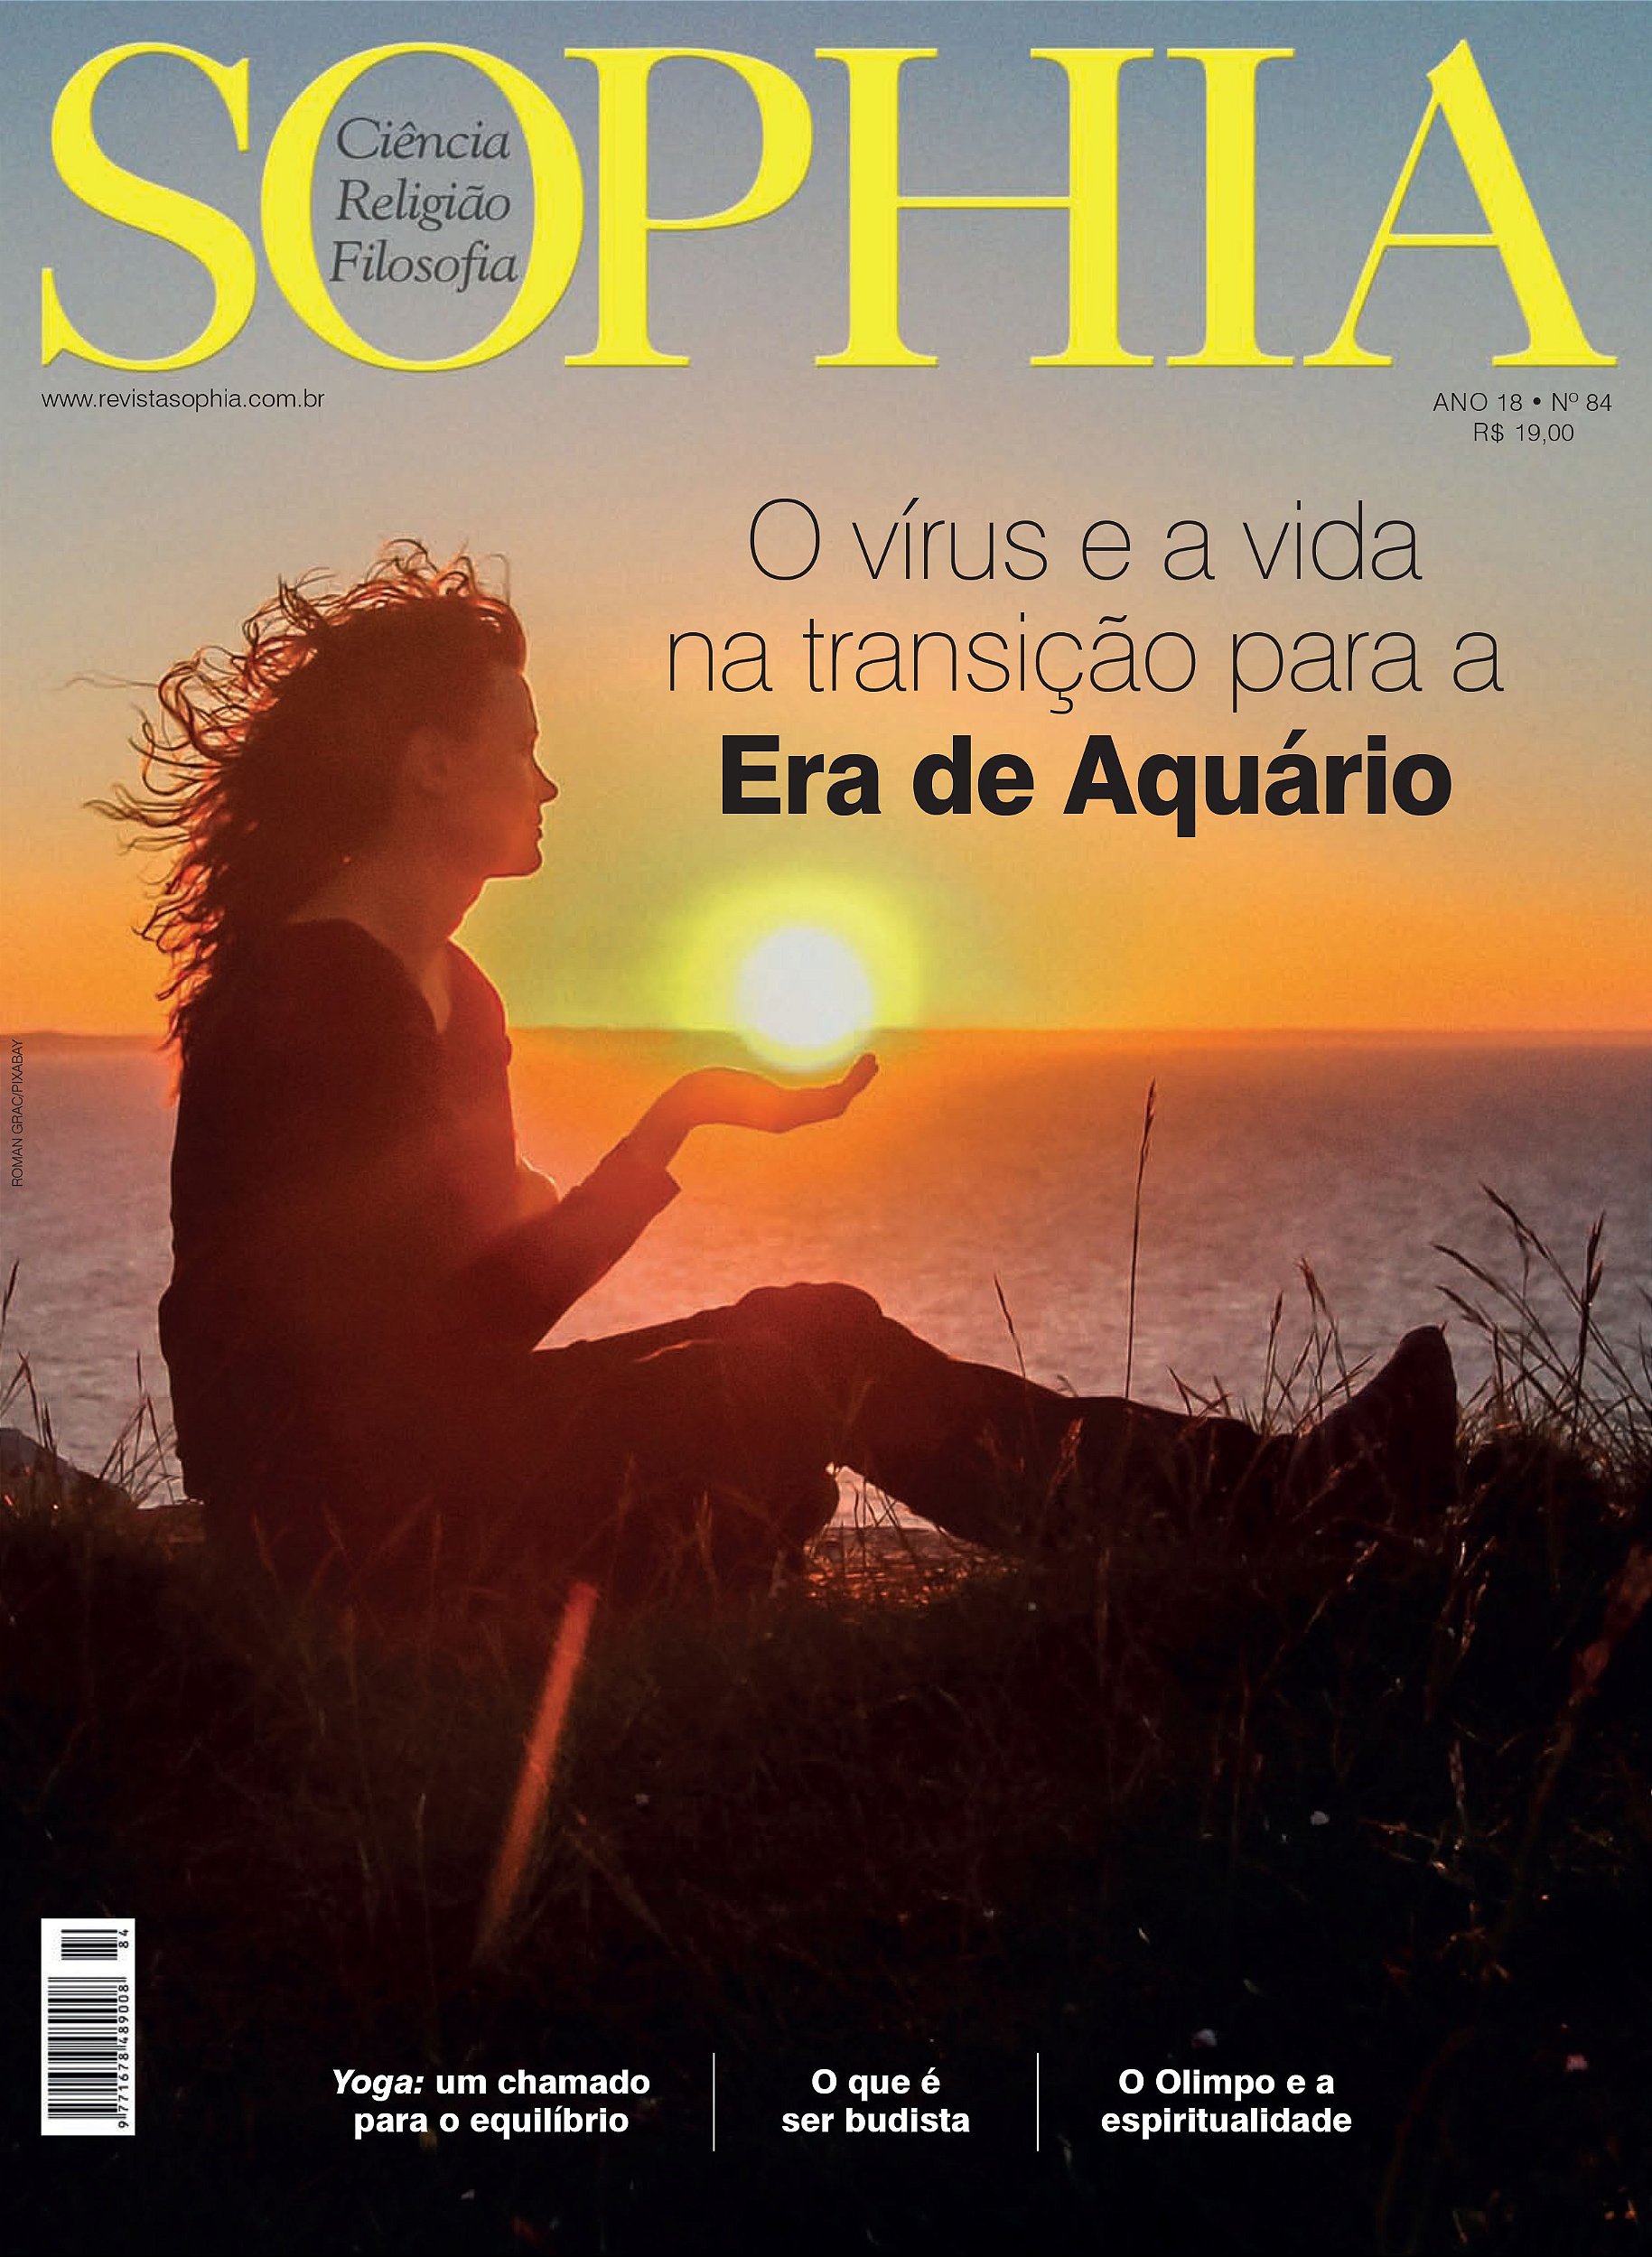 Revista Sophia nº 78 - Editora Teosofica - Página 1 - 52